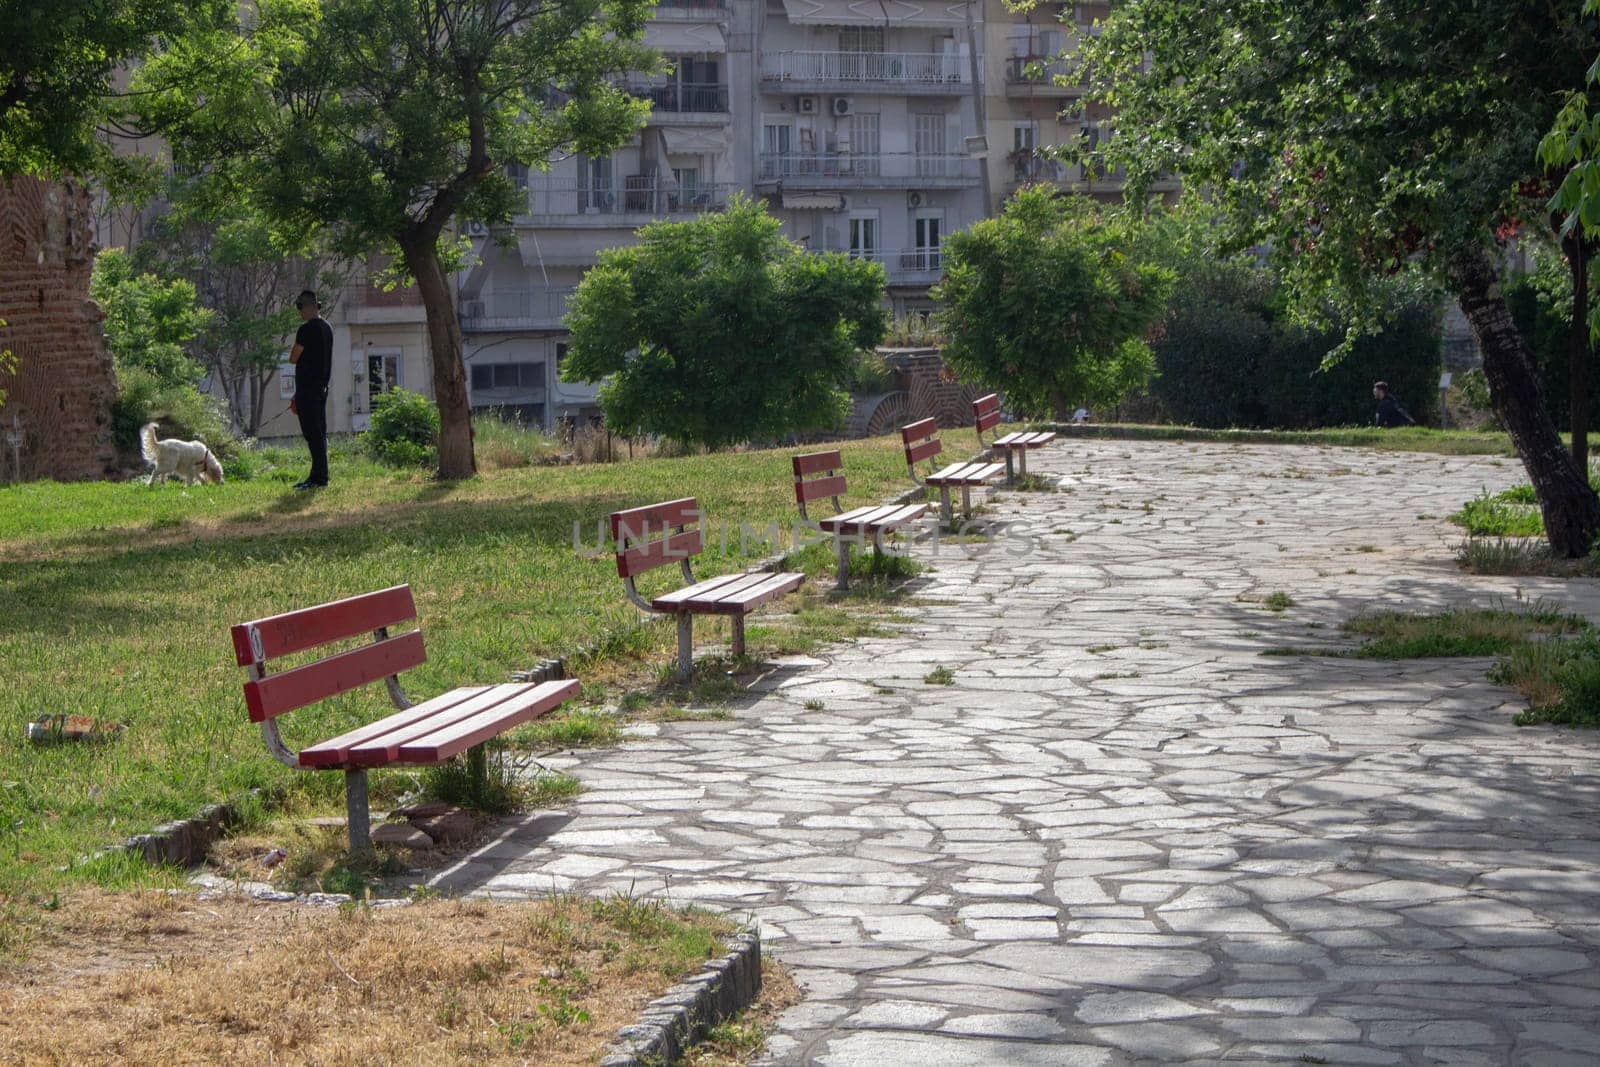 Thessaloniki Cityscape: Row of Benches in Urban Setting by DakotaBOldeman